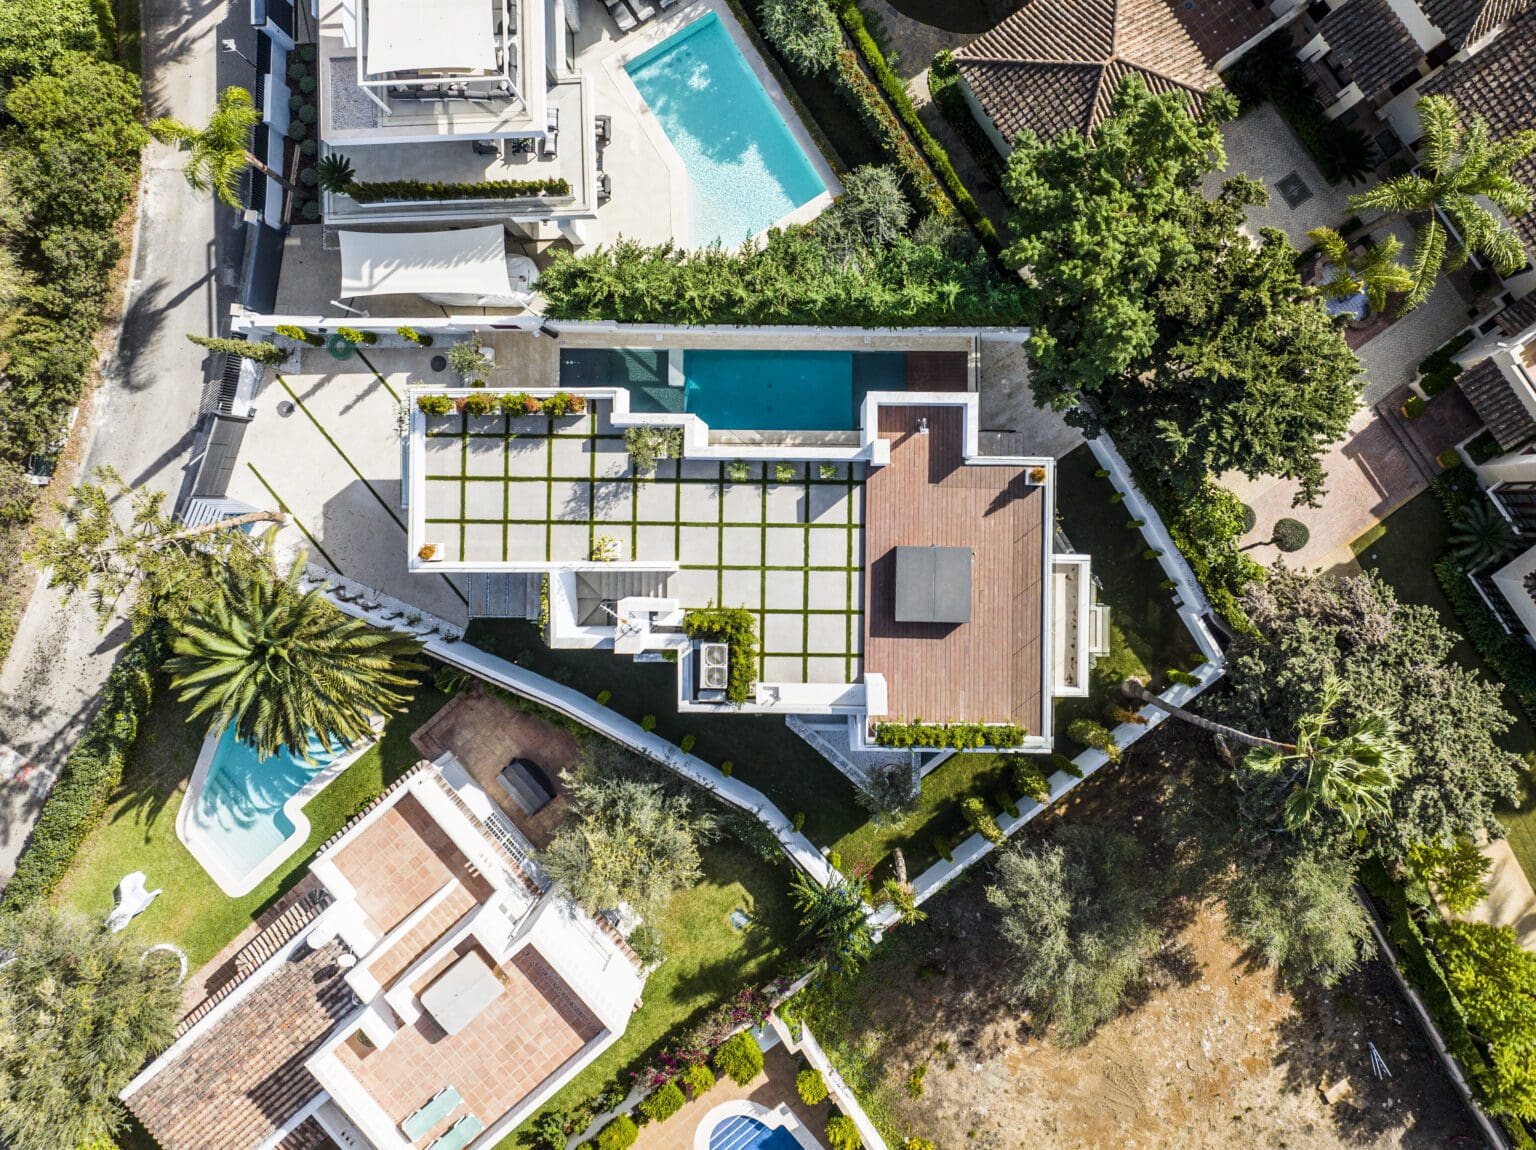 Villa Cypress – Stunning Beach Villa